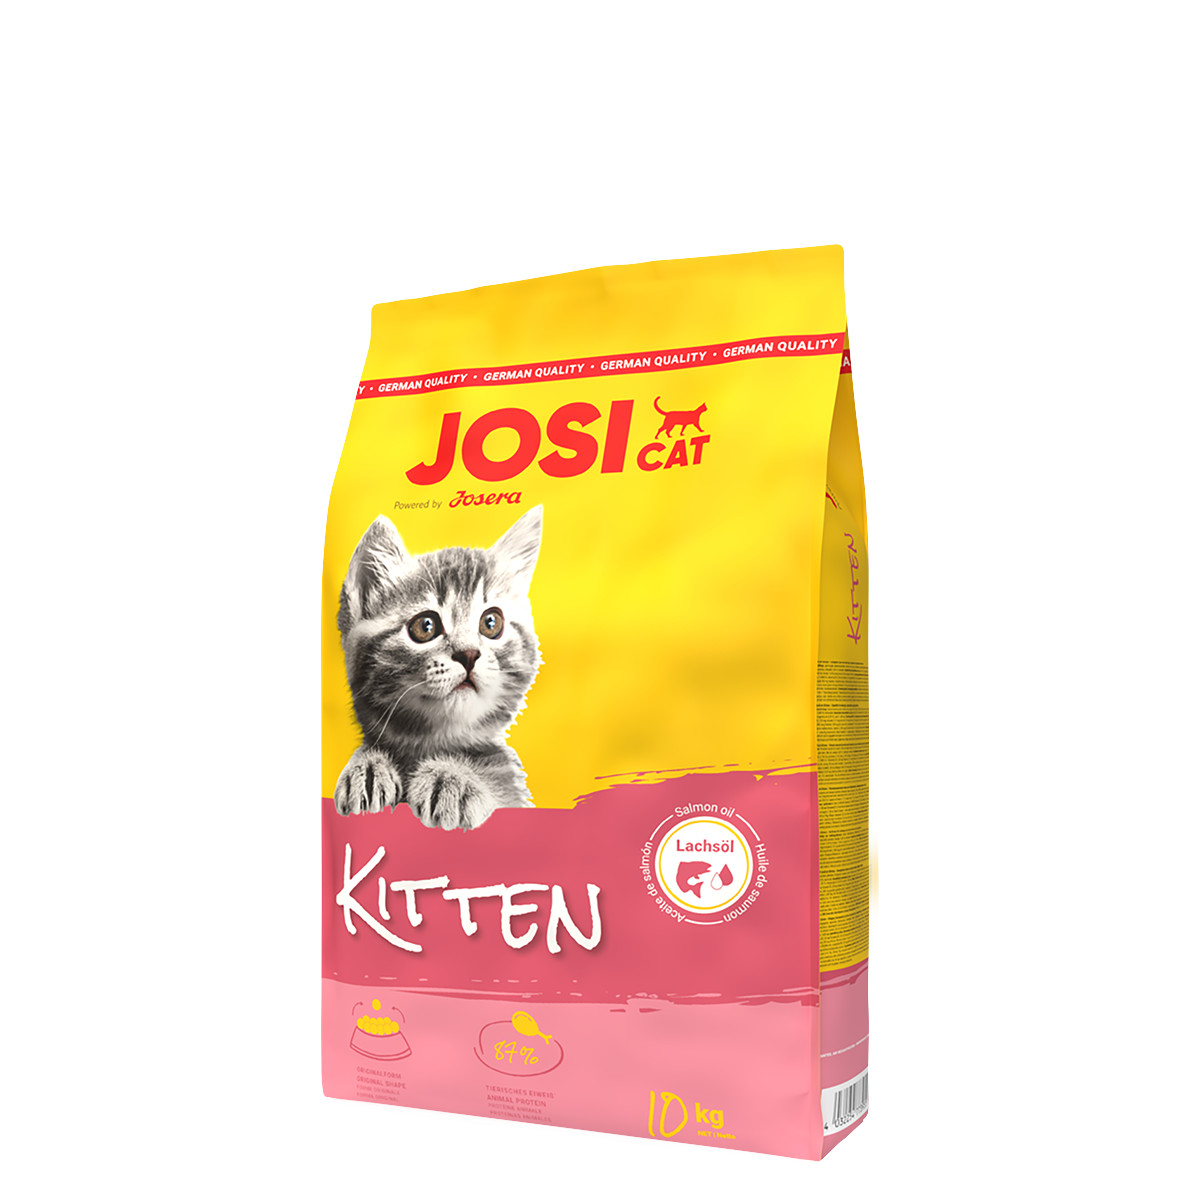 Josera JosiCat Kitten 10 кг (50012751) - зображення 1